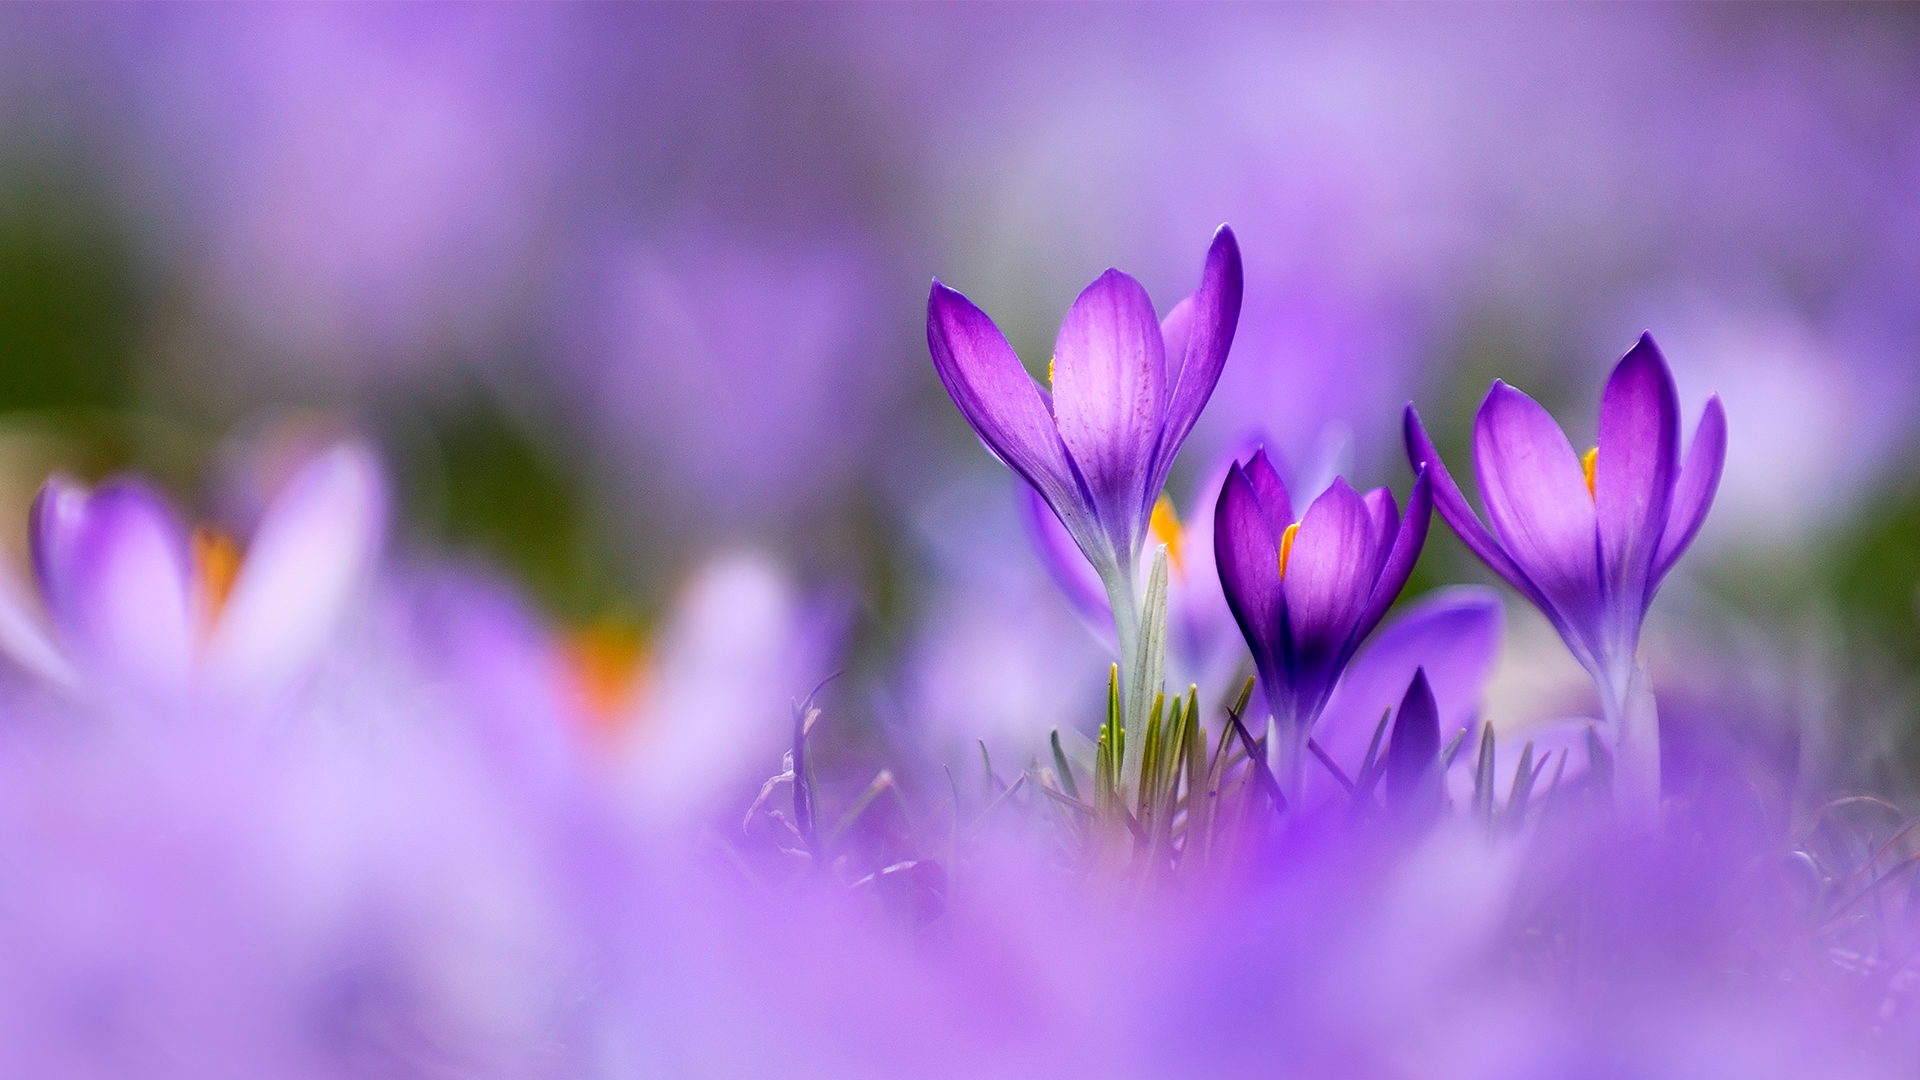 Colour of Spring by Raimund Linke